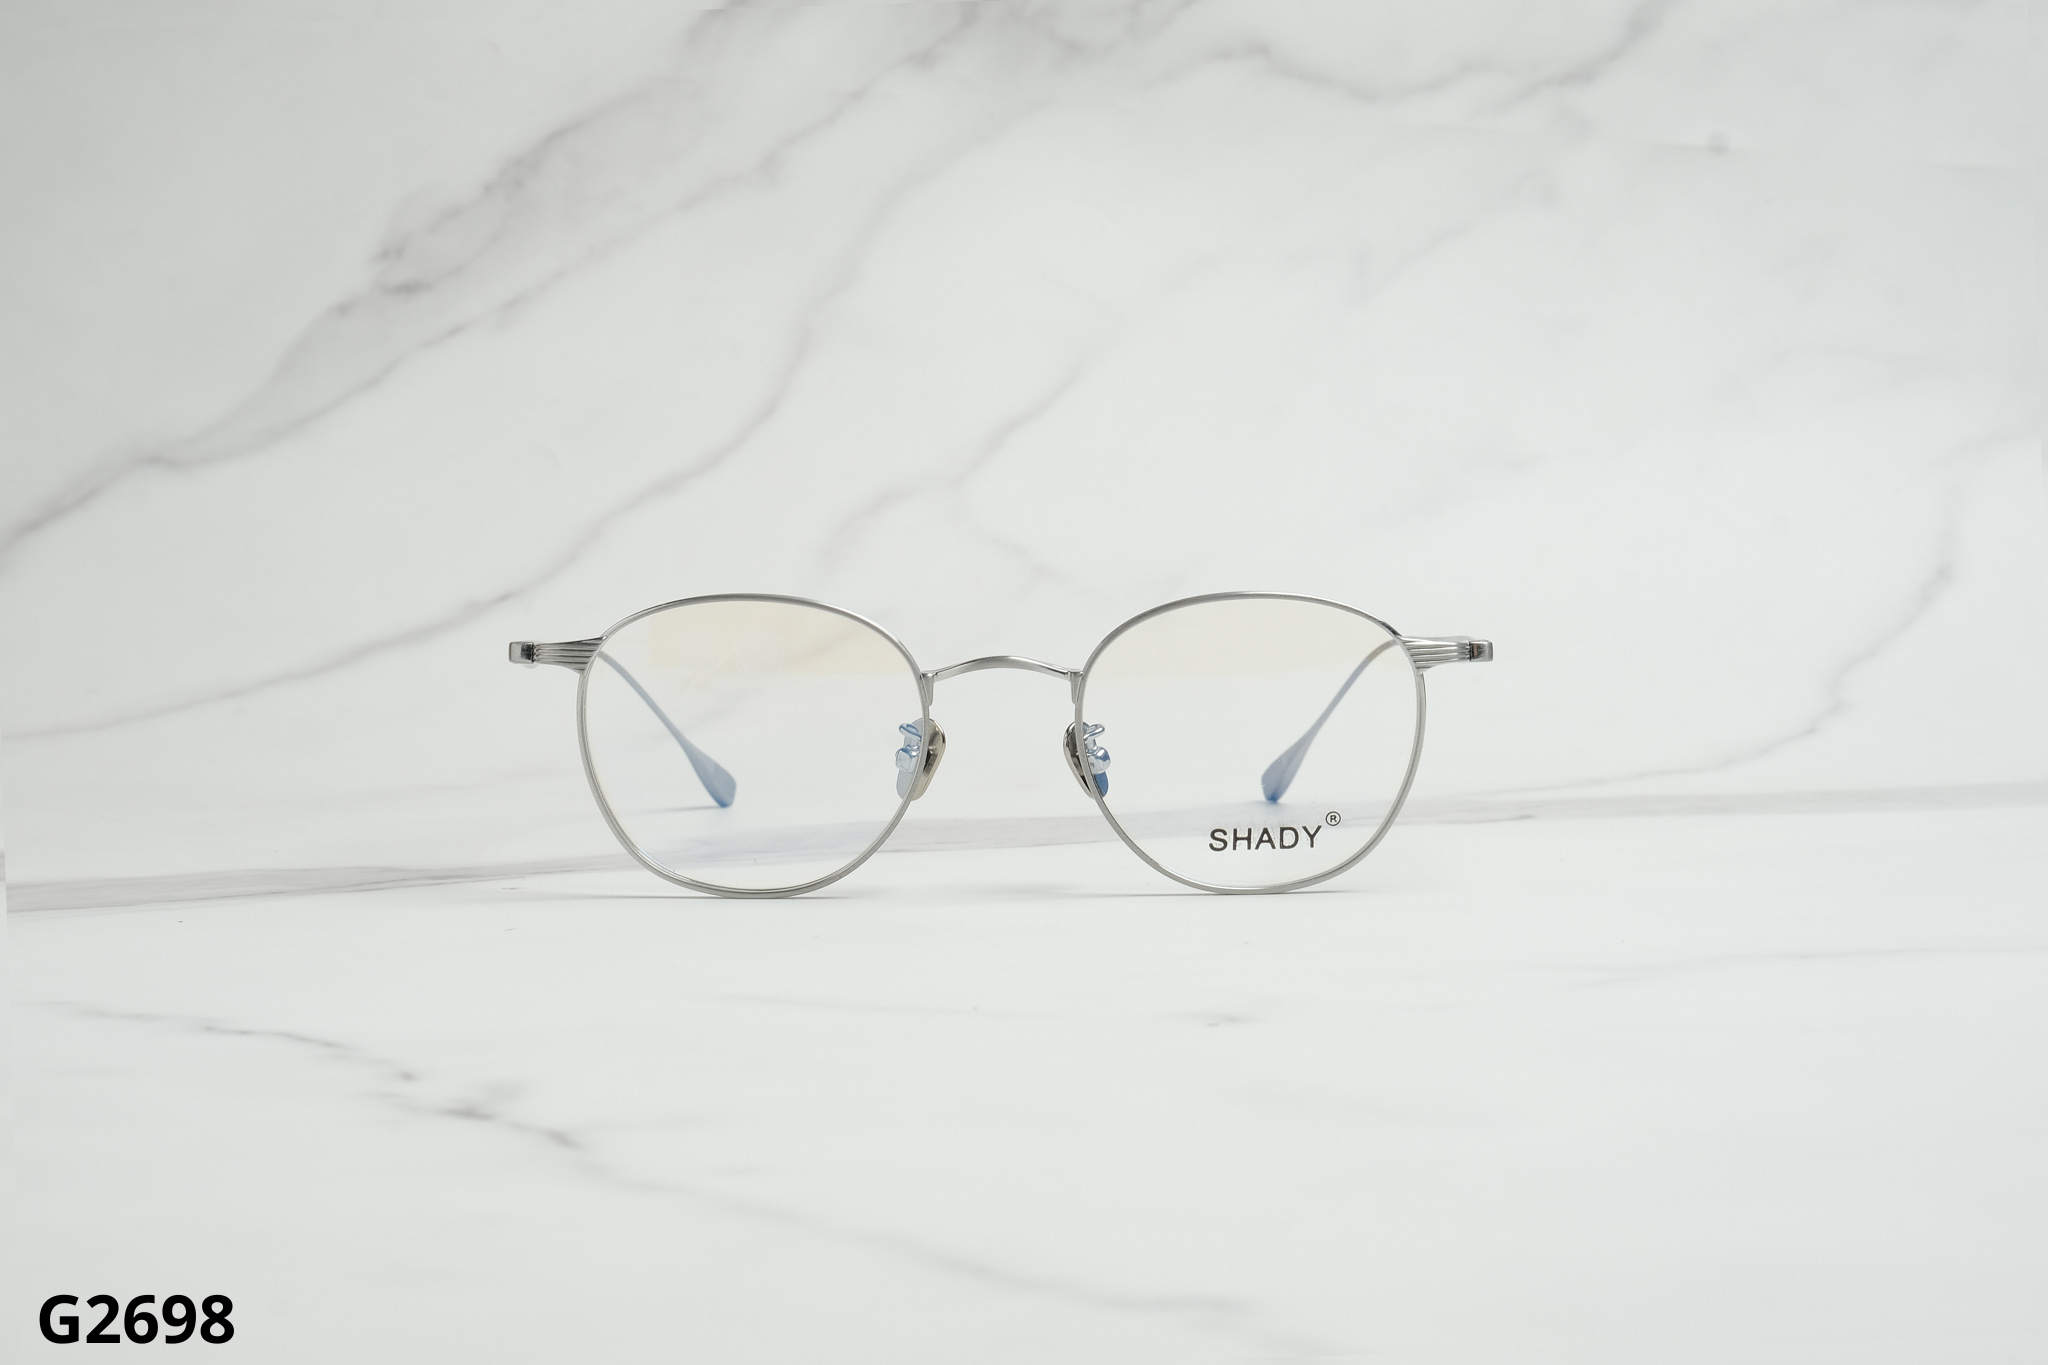  SHADY Eyewear - Glasses - G2698 